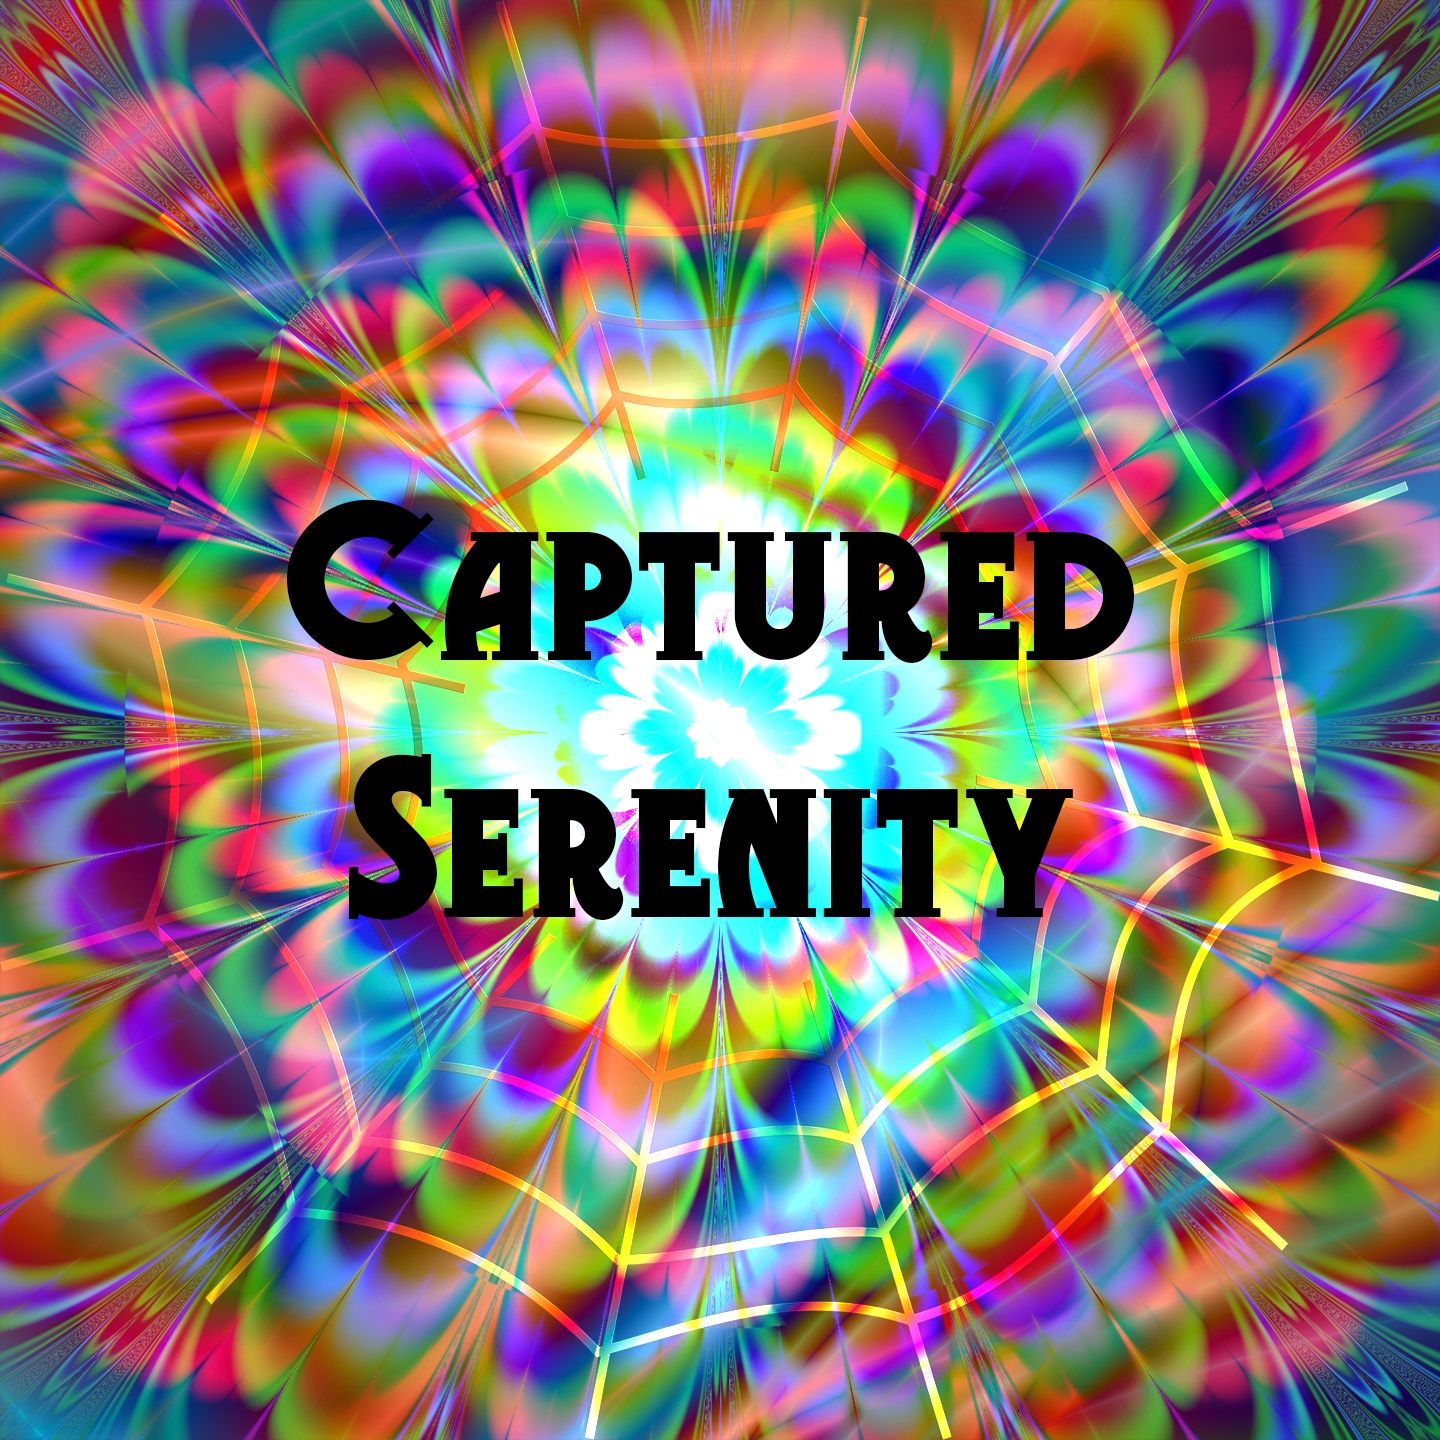 Captured Serenity